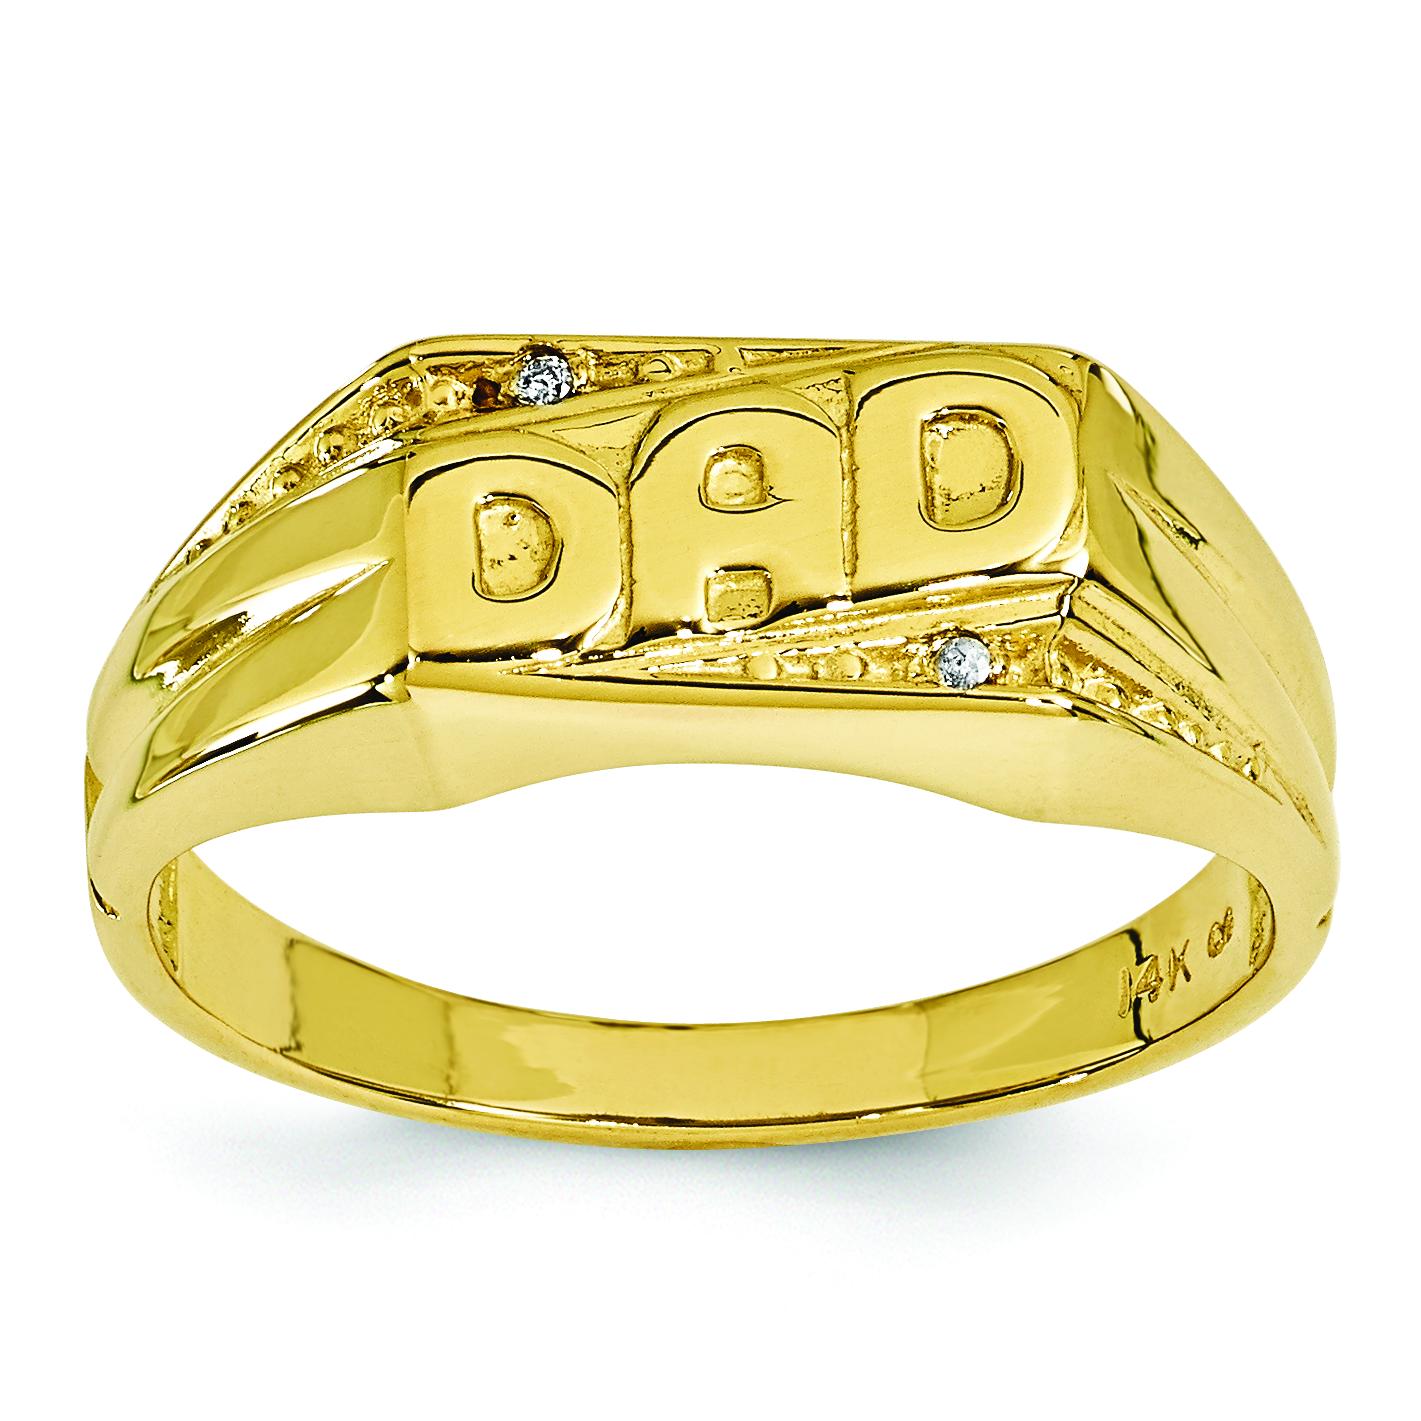 Findingking 14K Yellow Gold Diamond Dad Mens Ring Jewelry Sz 10